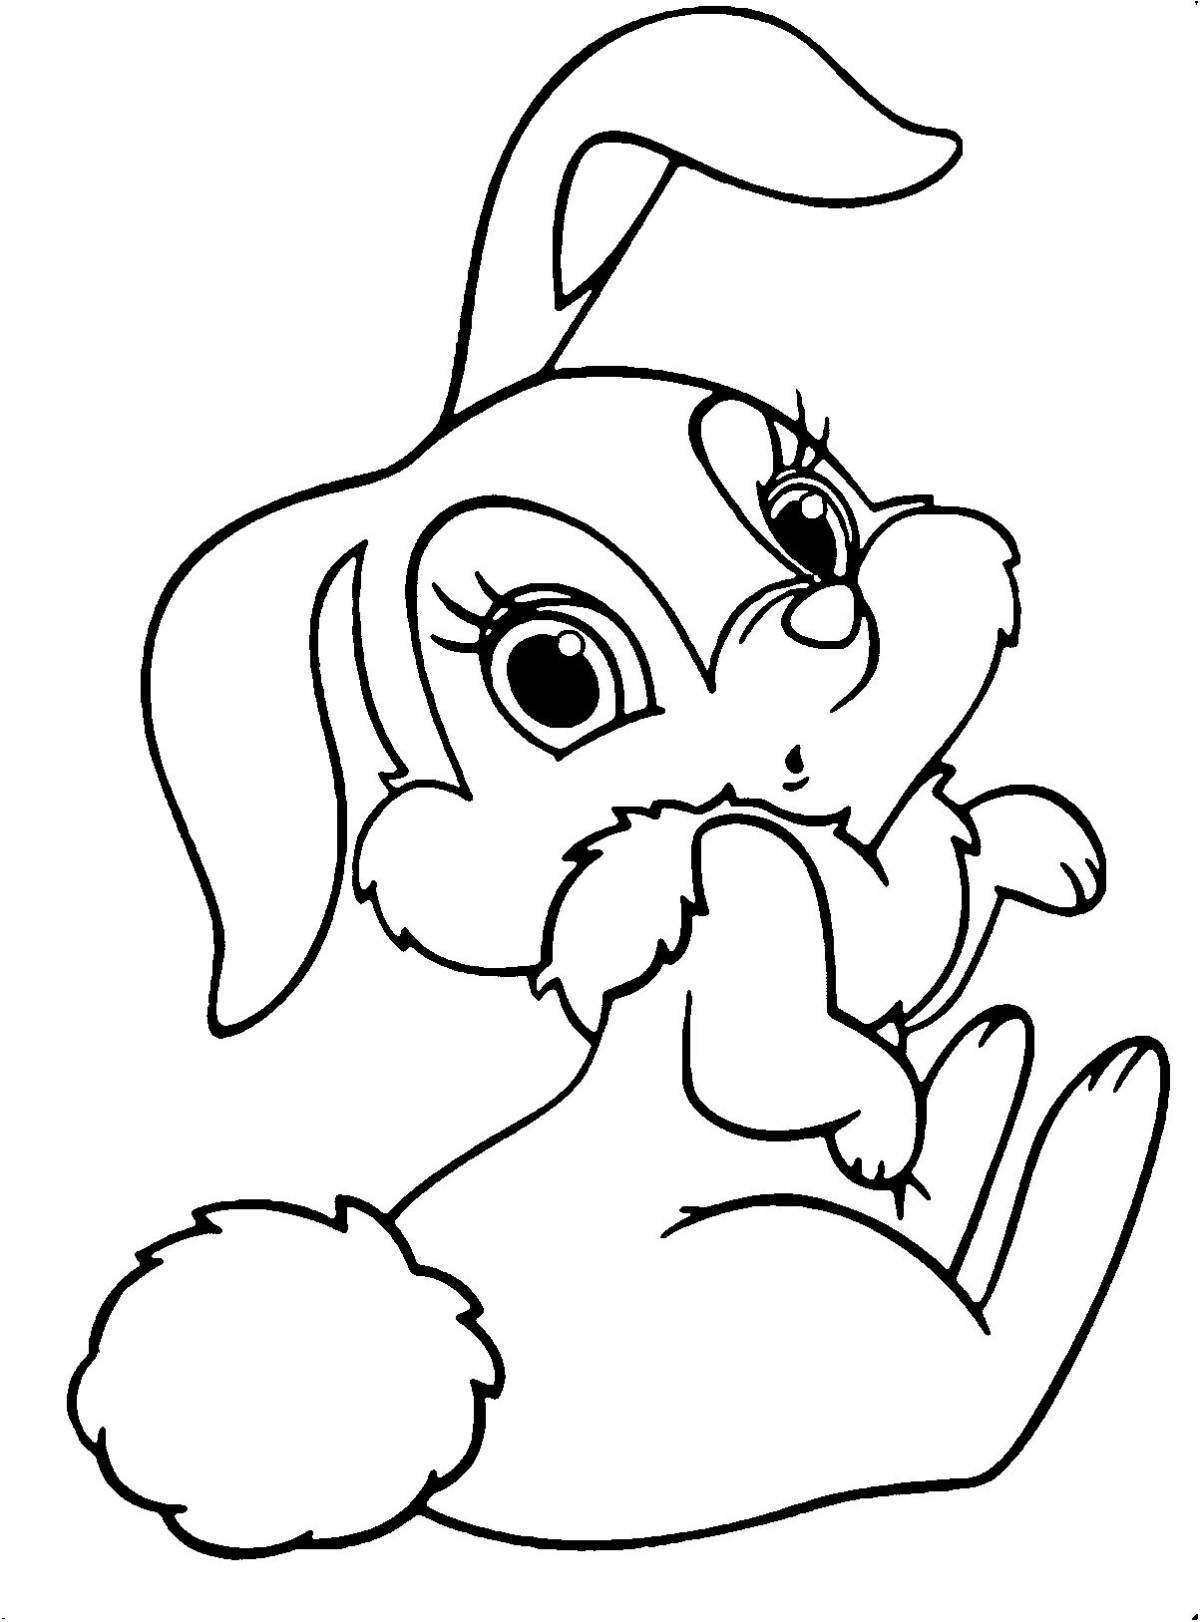 Snuggly coloring page cartoon rabbit